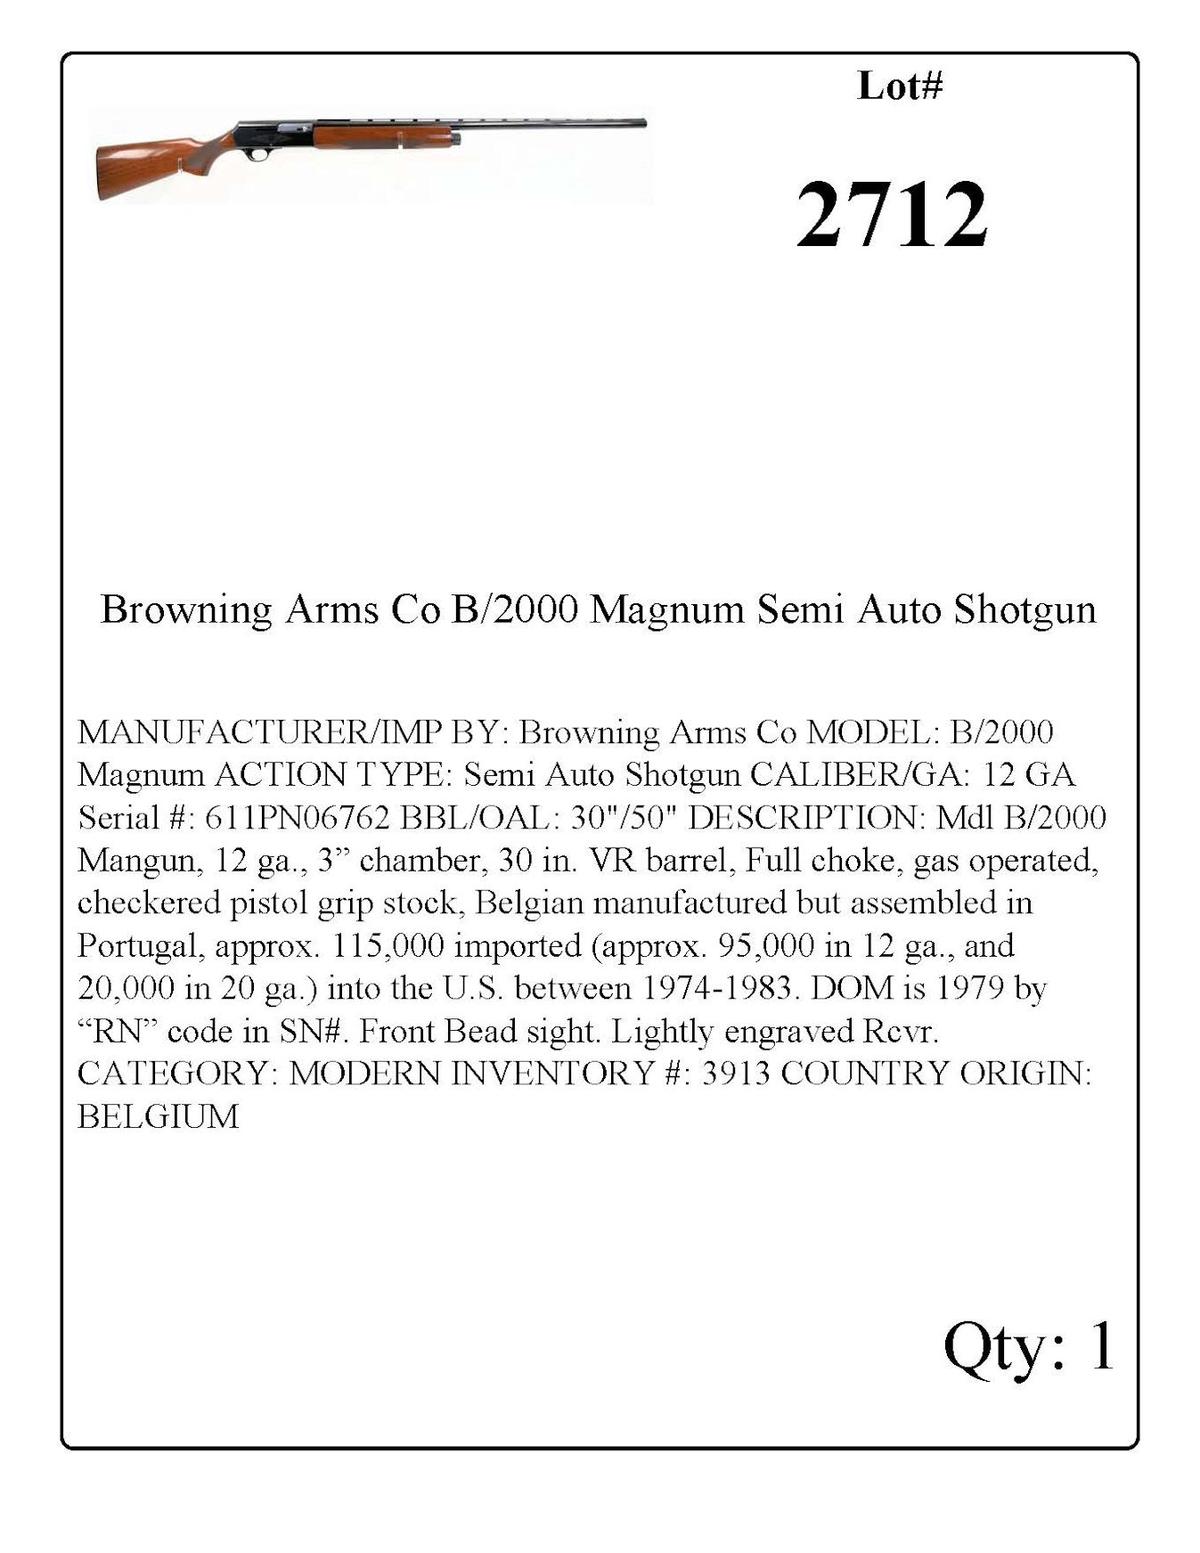 Browning Arms Co B/2000 Magnum Semi Auto Shotgun